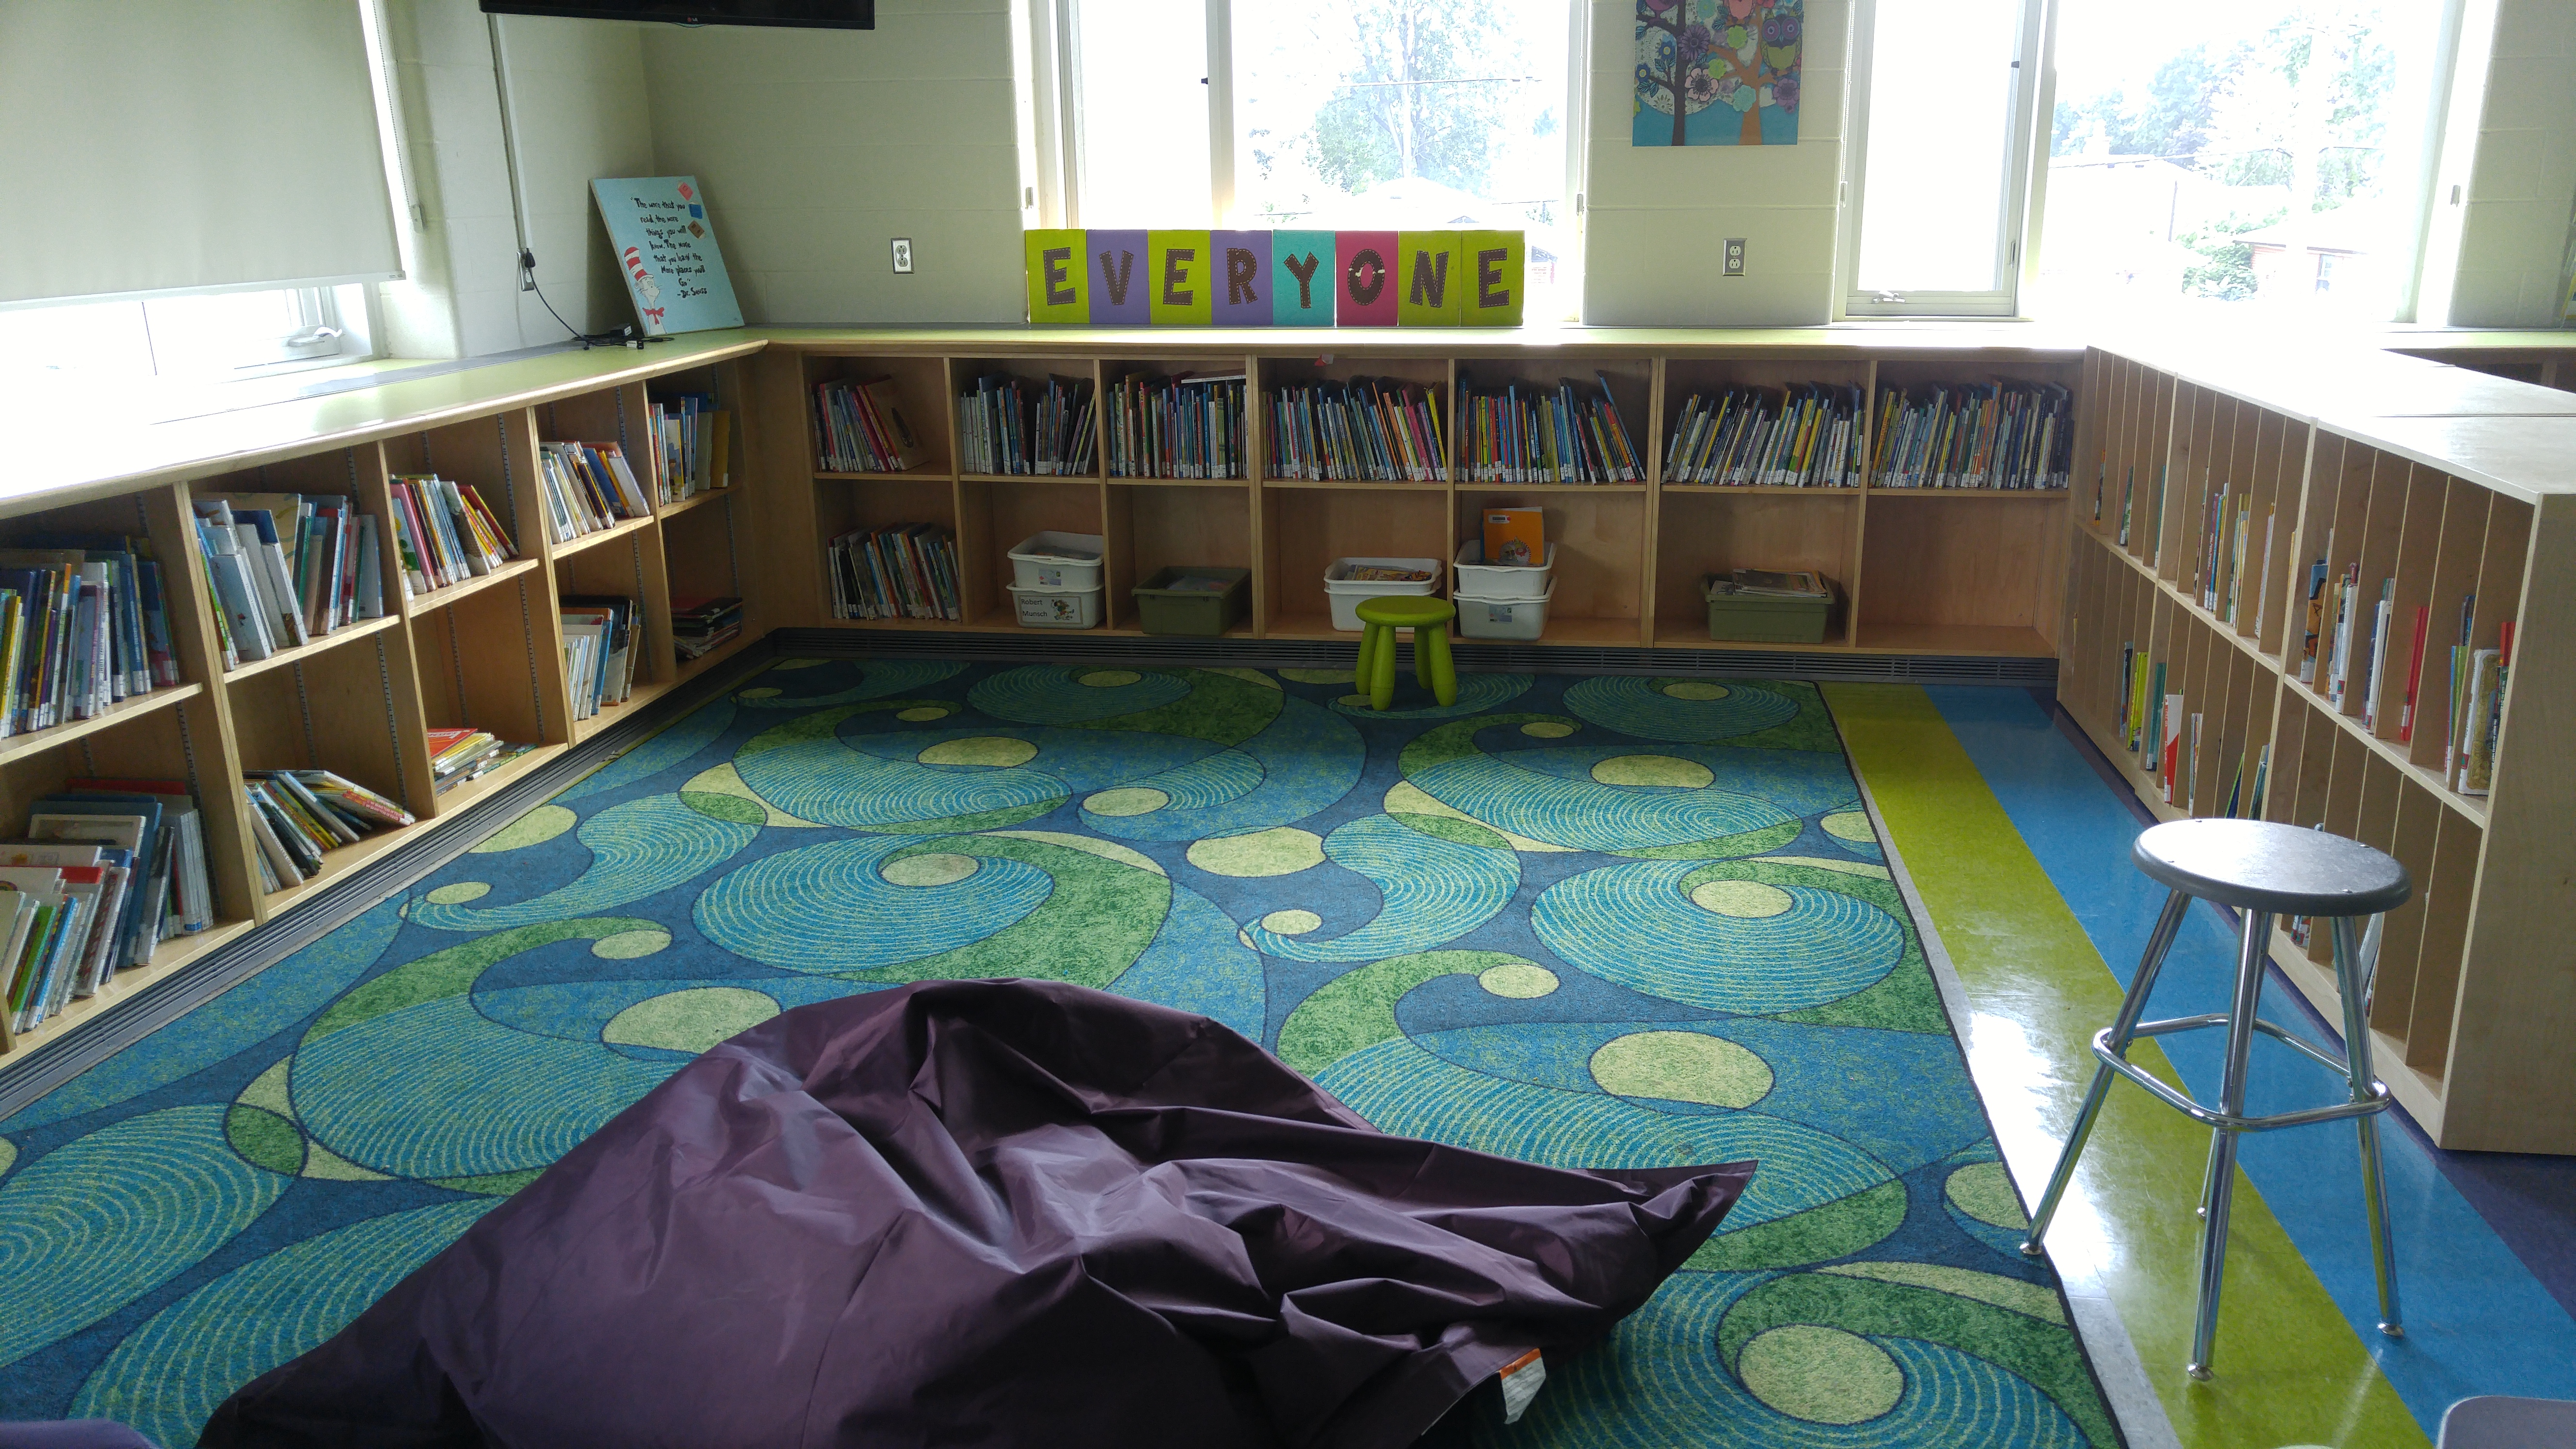 carpet area by book shelves